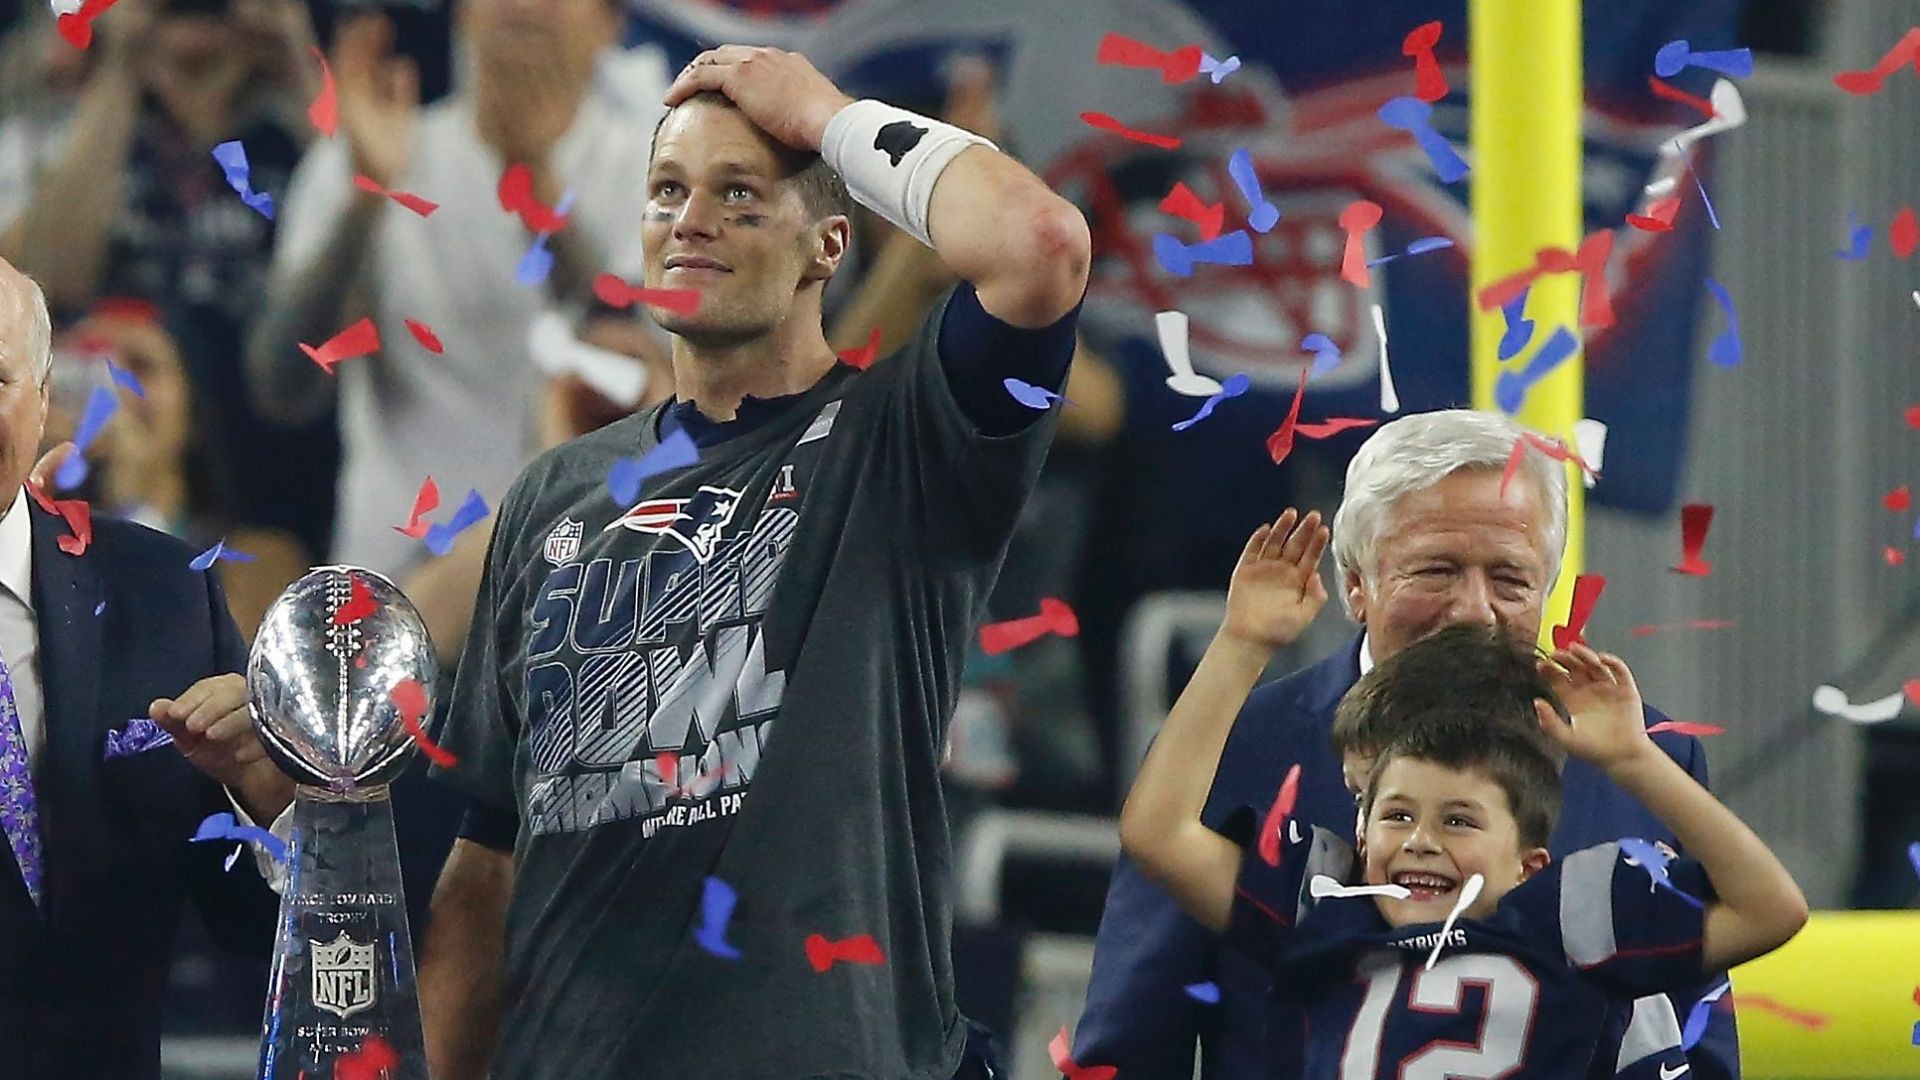 Tom Brady named Super Bowl MVP after leading historic Patriots rally | abc7.com